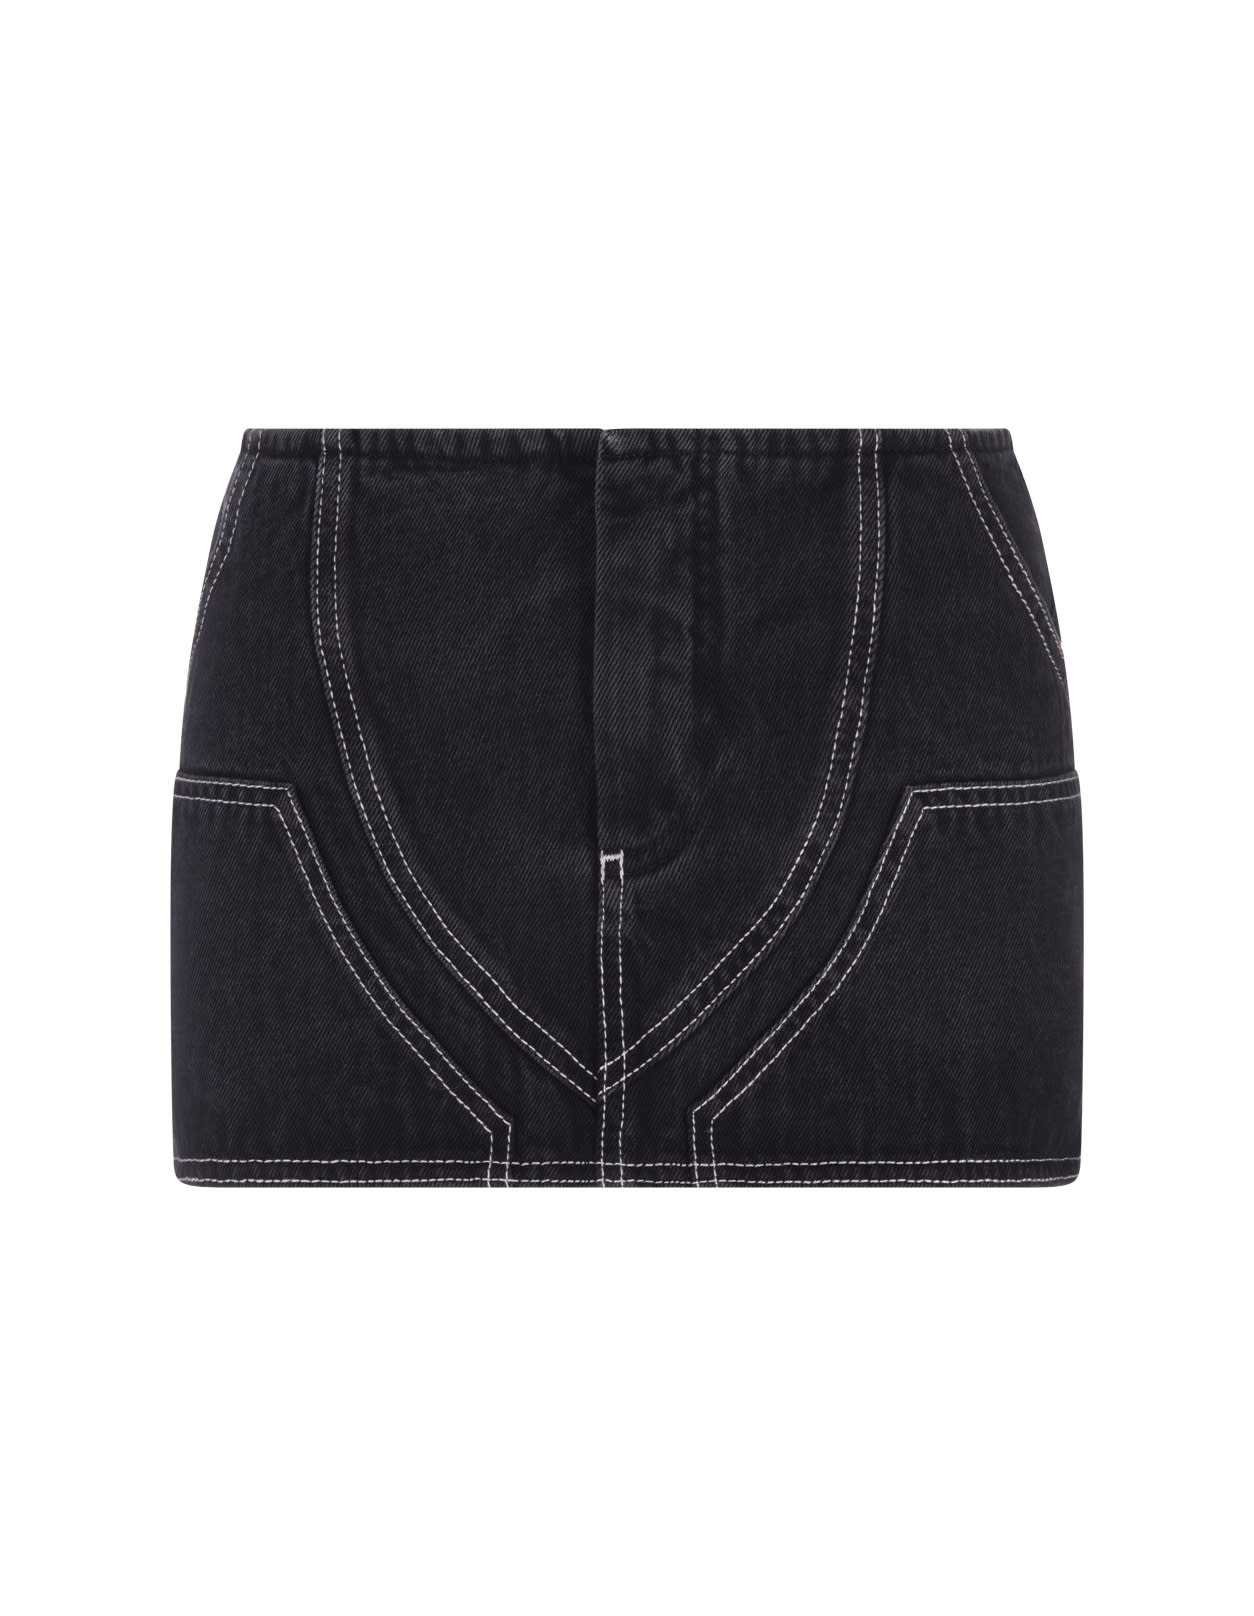 Black Denim Mini Skirt With Contrasting Stitching